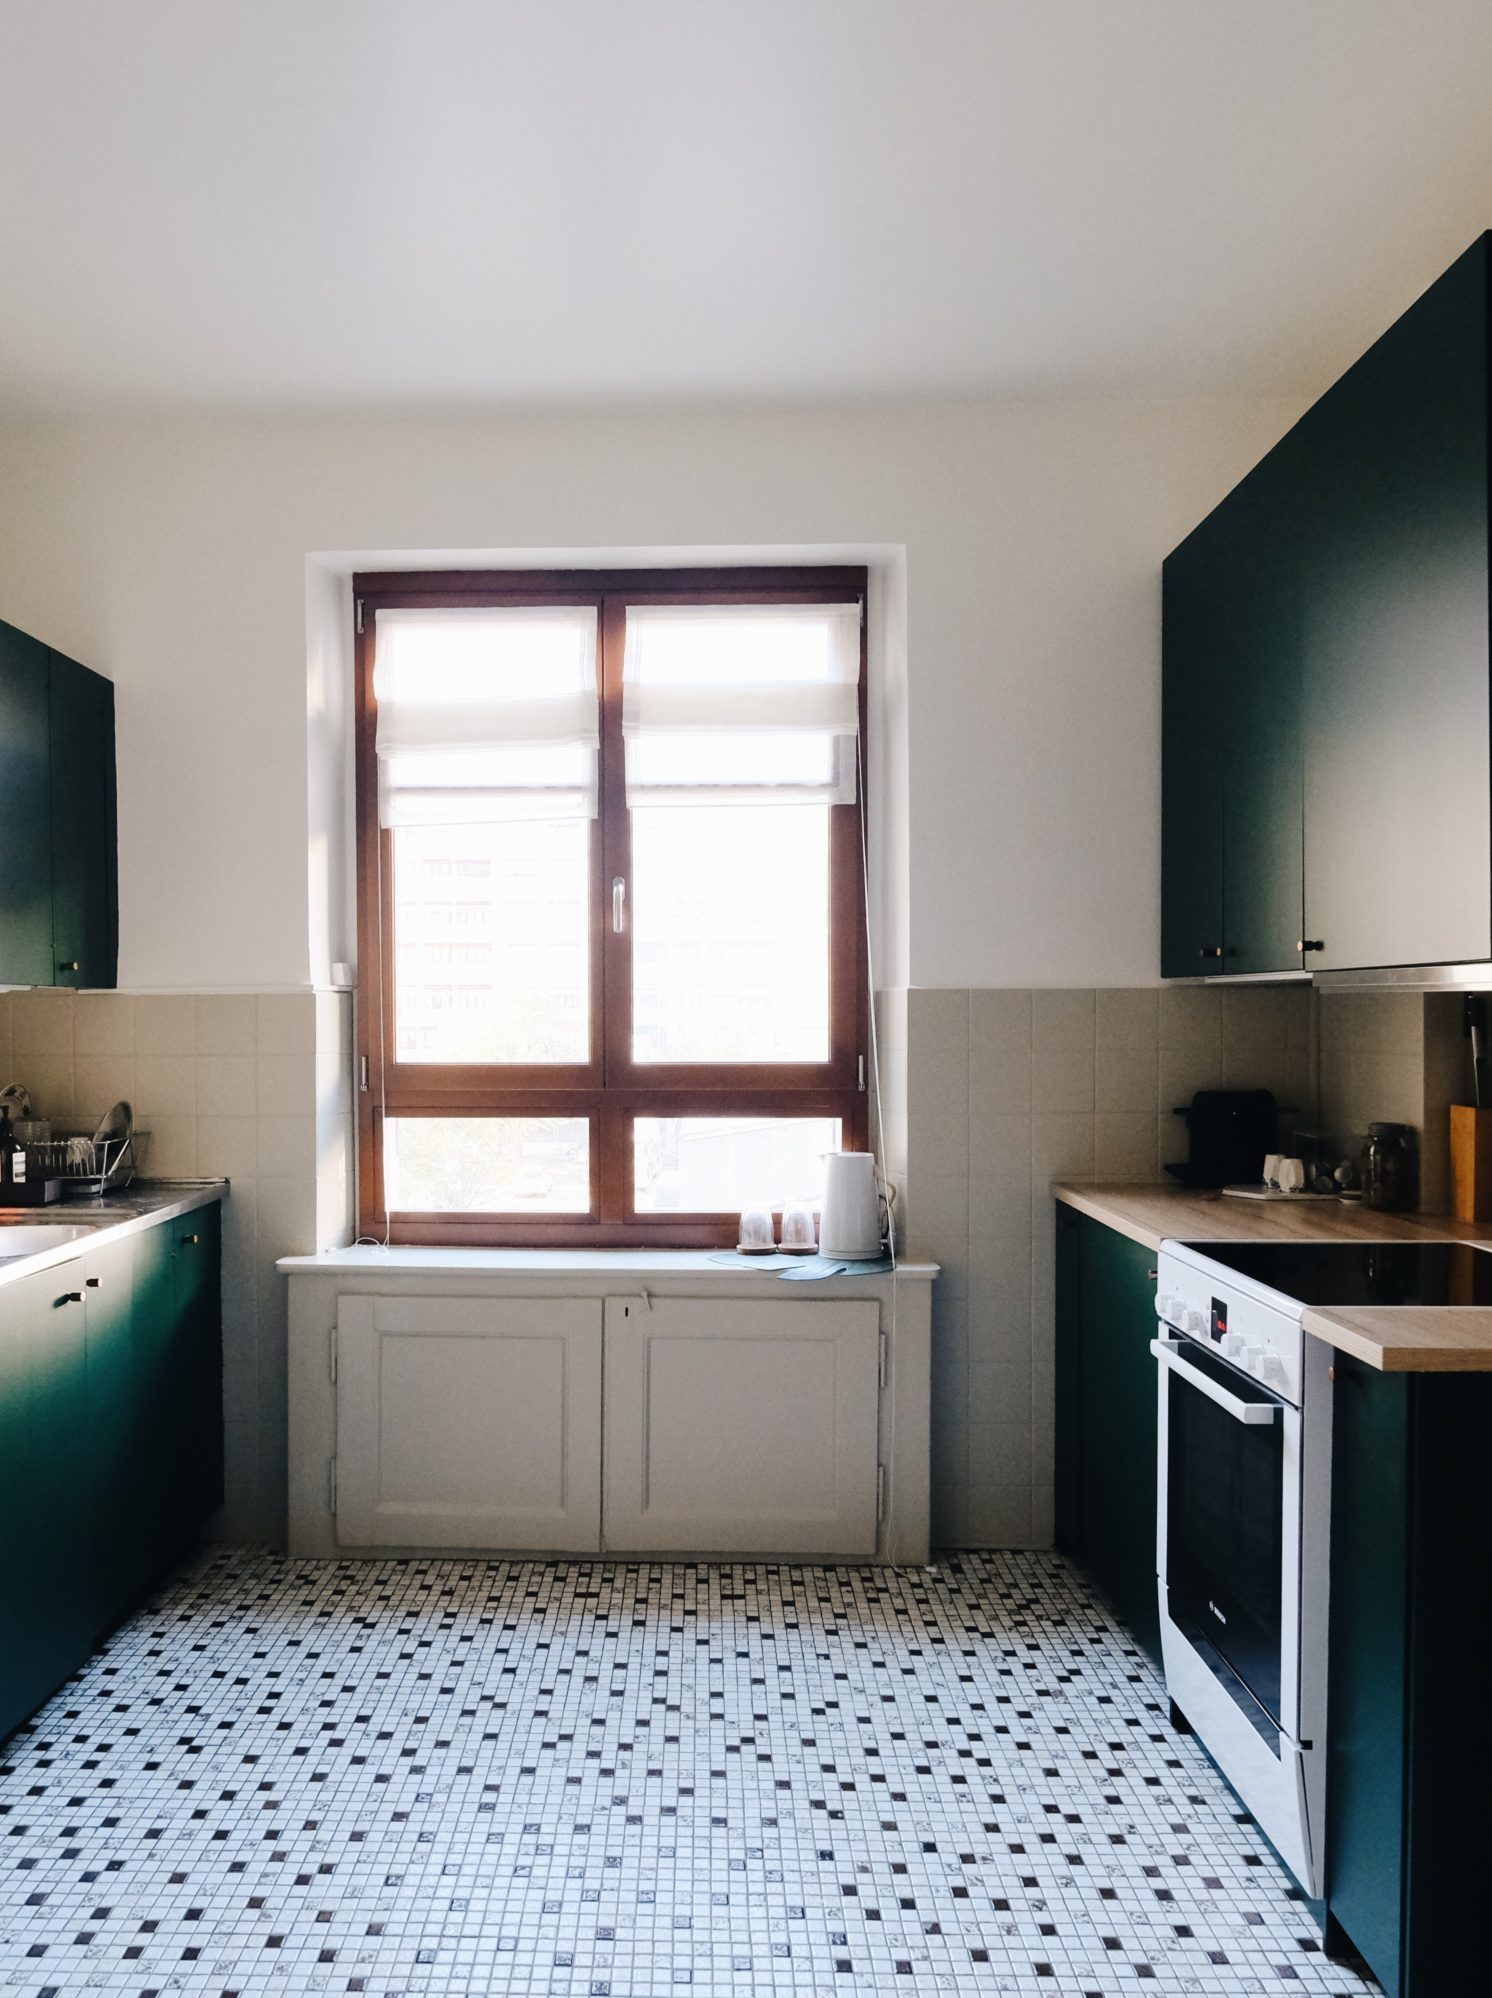 The dark green ikea kitchen, a general view